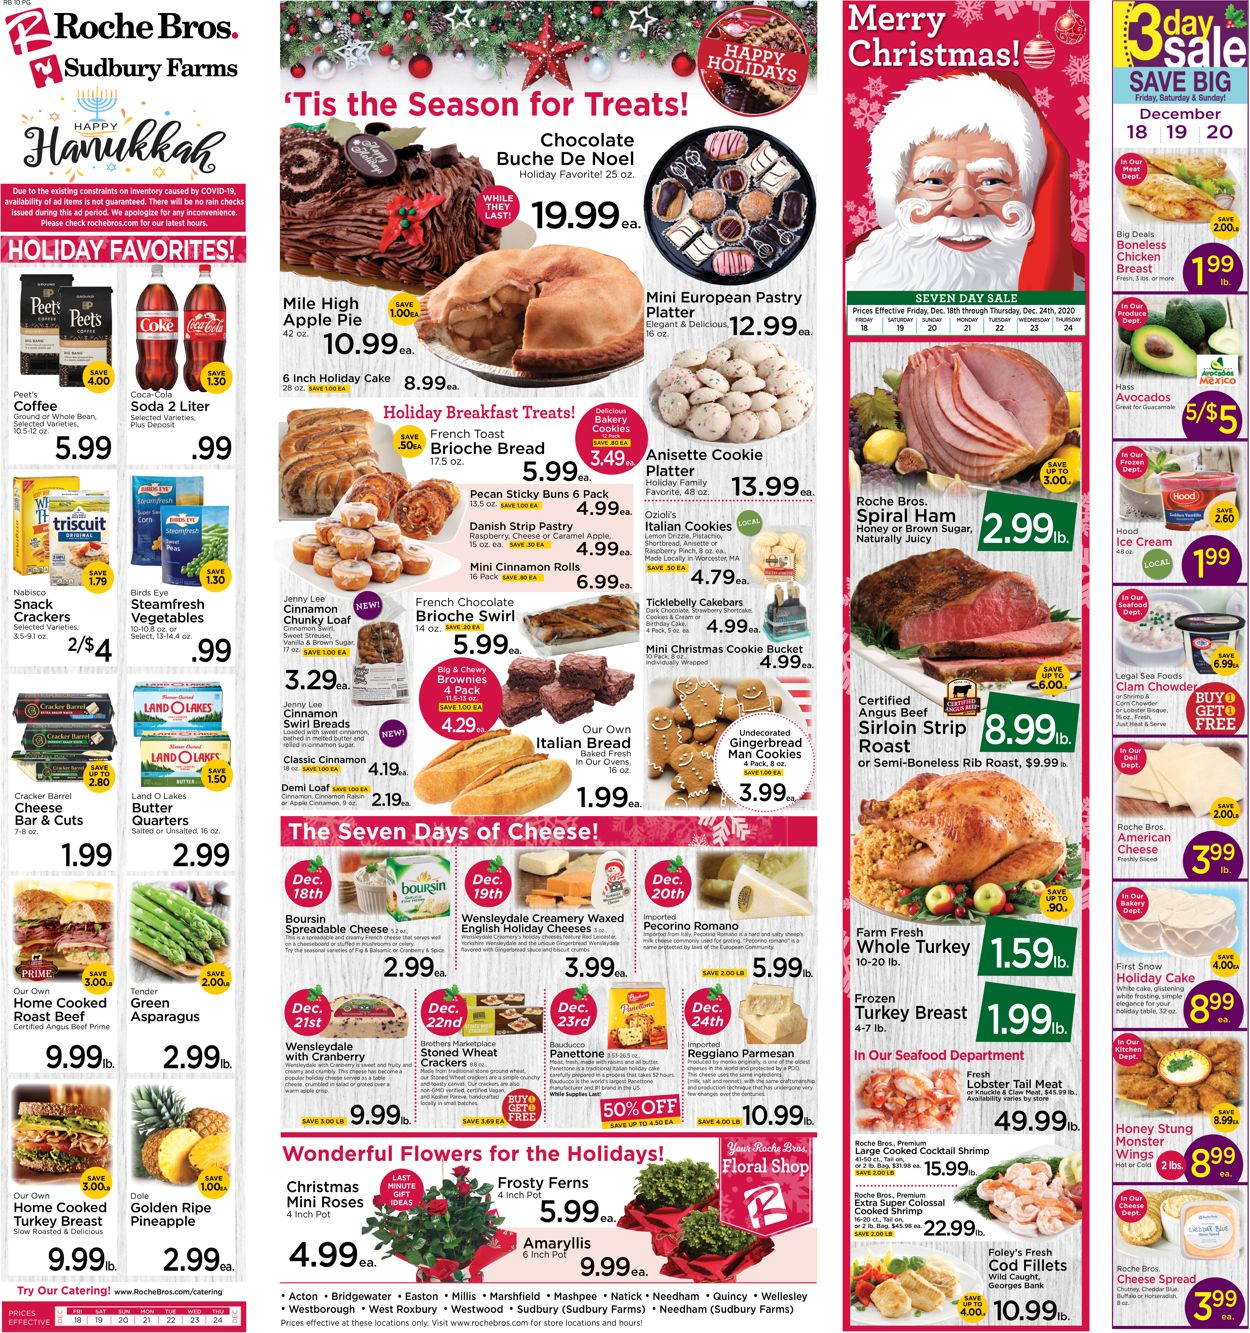 Roche Bros. Supermarkets Christmas Ad 2020 Weekly Ad Circular - valid 12/18-12/24/2020